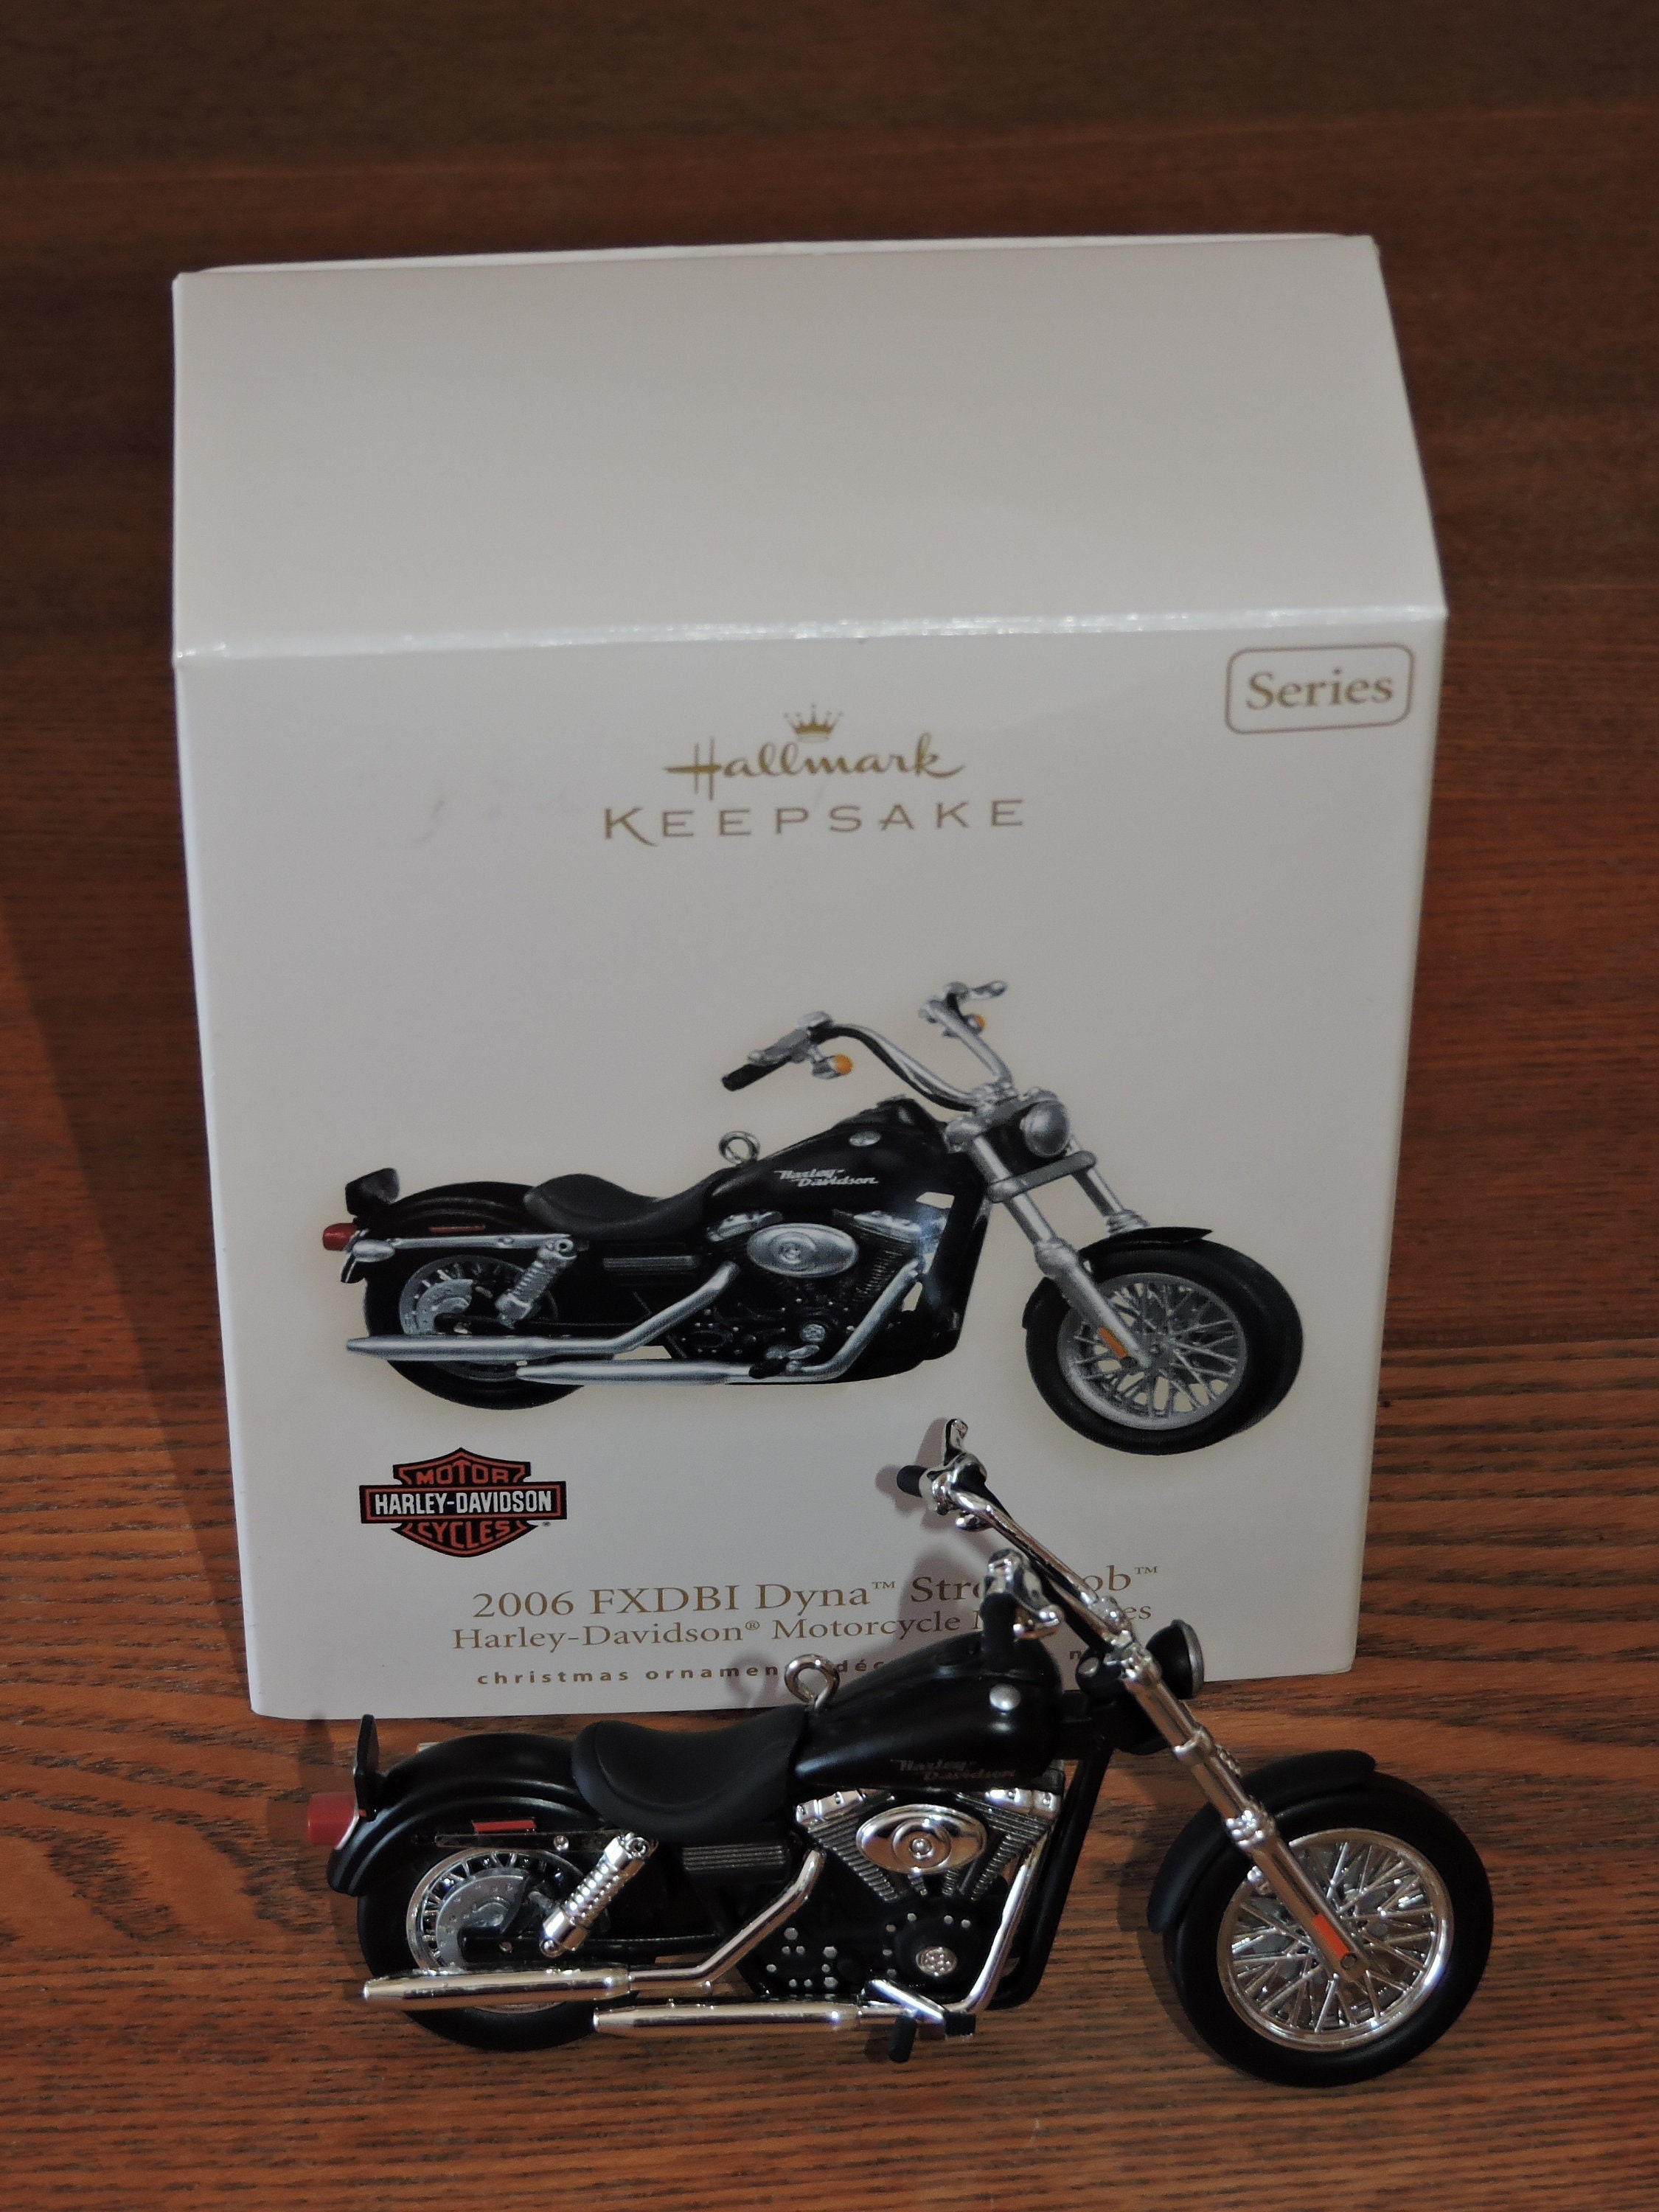 2006 Hallmark Miniature Harley Davidson Motorcycle Christmas